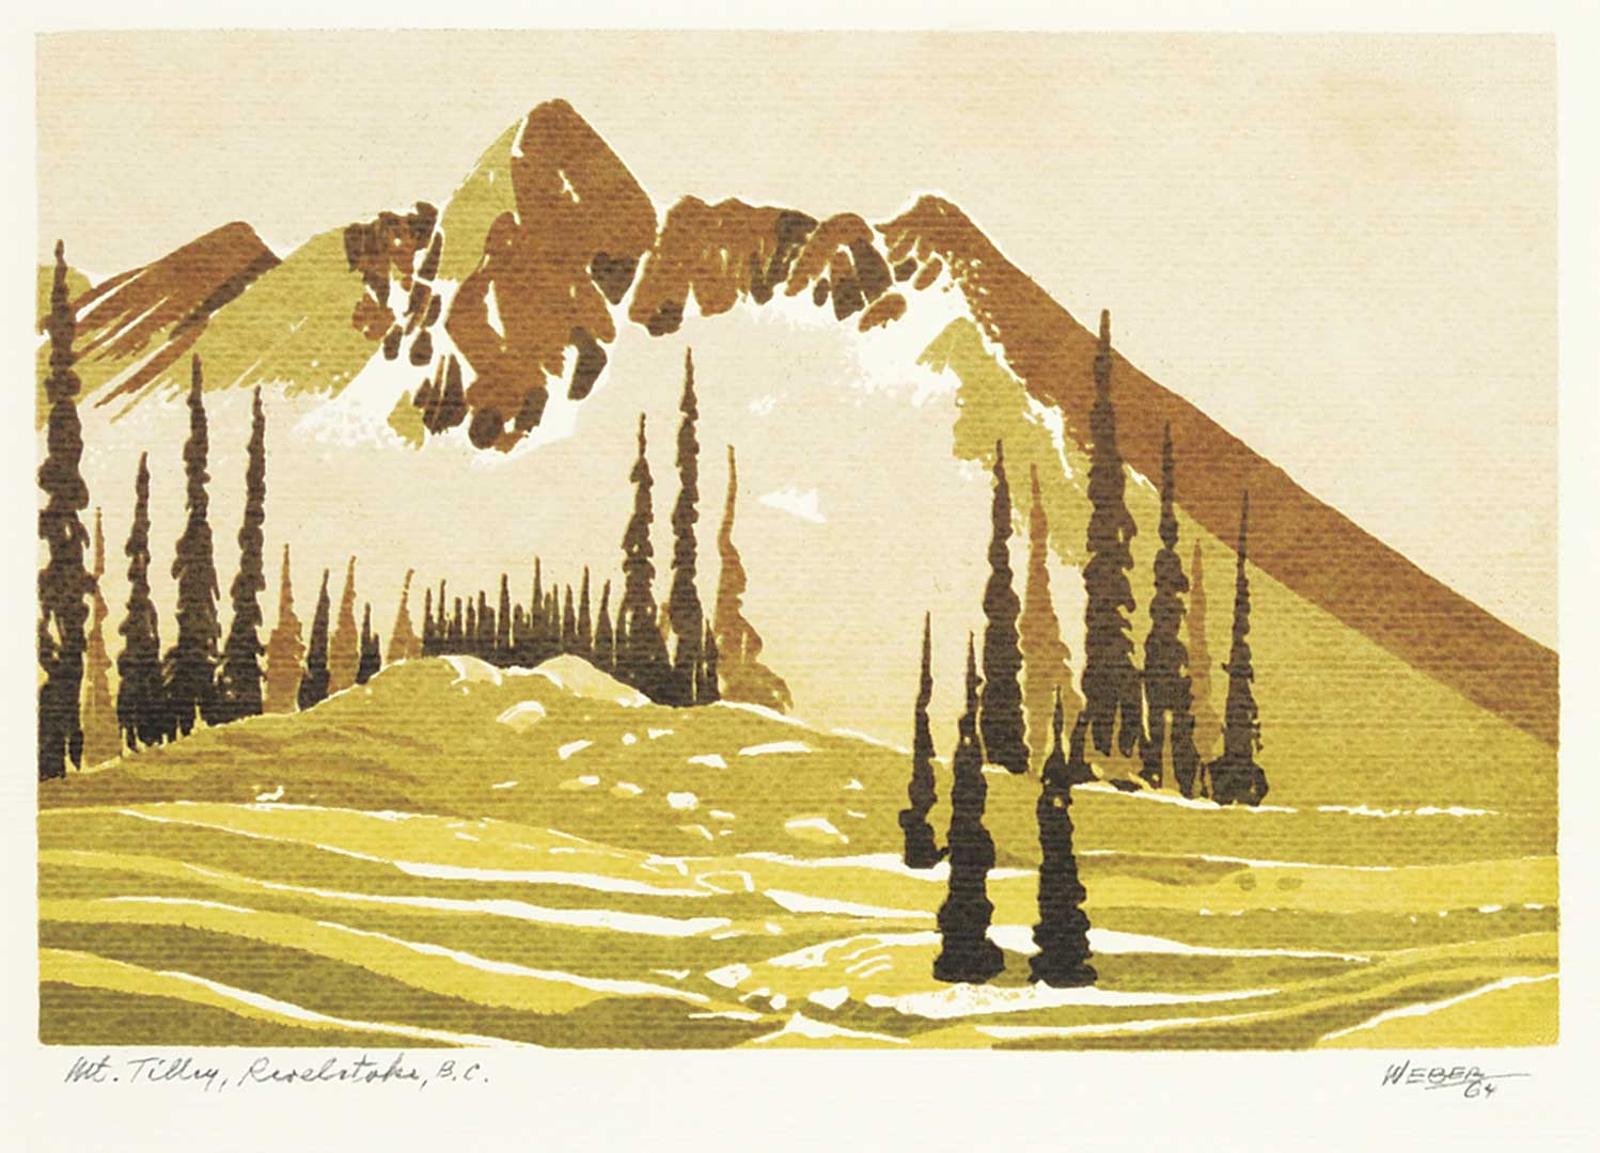 George Weber (1907-2002) - Mt. Tilley, Revelstoke, B.C.